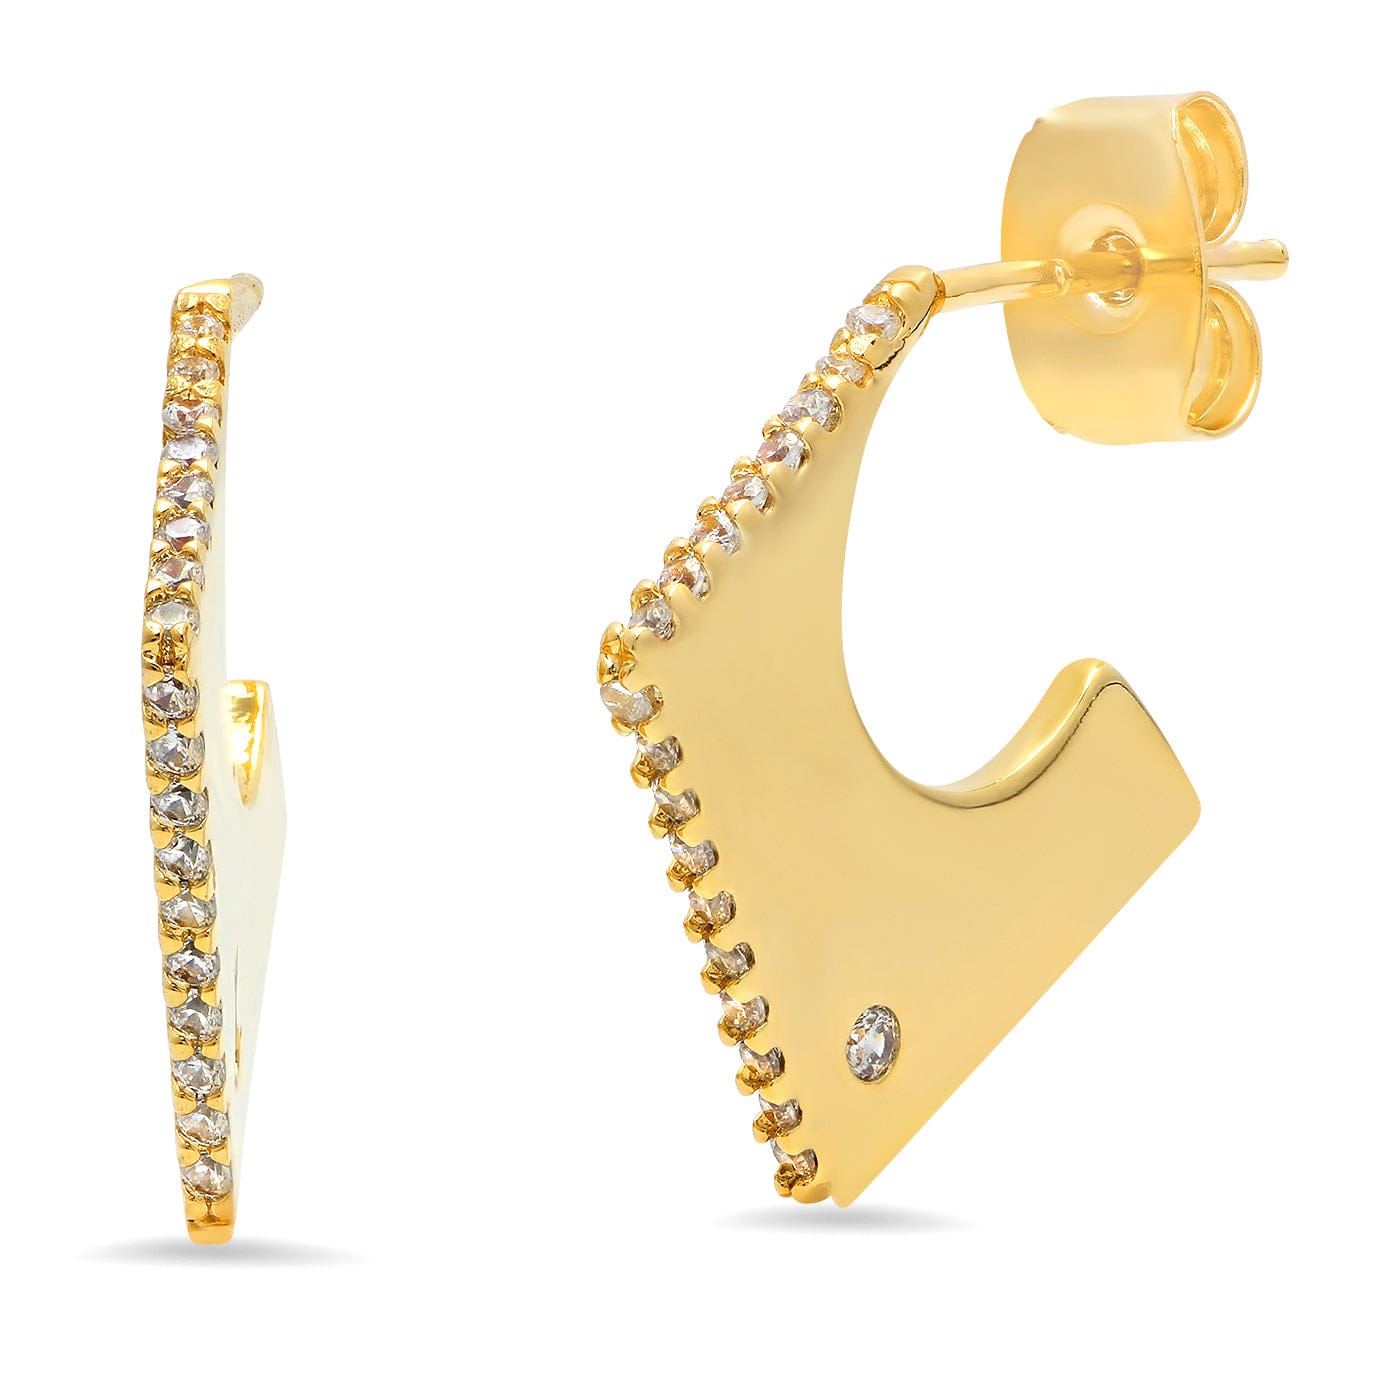 TAI JEWELRY Earrings Diamond Abstract Huggie